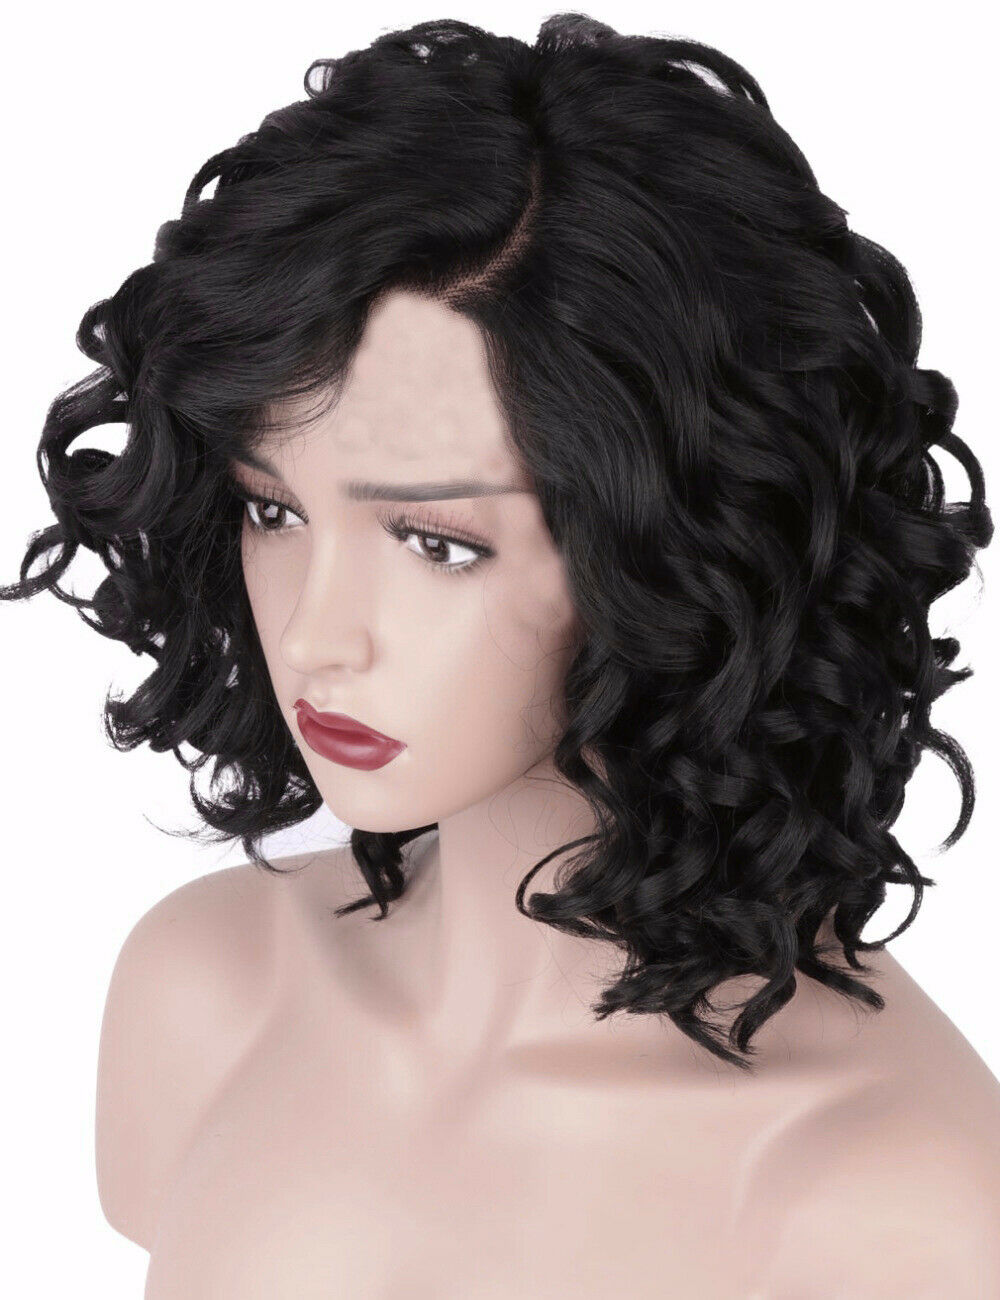 Short Wavy Full Wigs Lady Women's Curly Synthetic Hair Wigs Heat Resistant Wigs